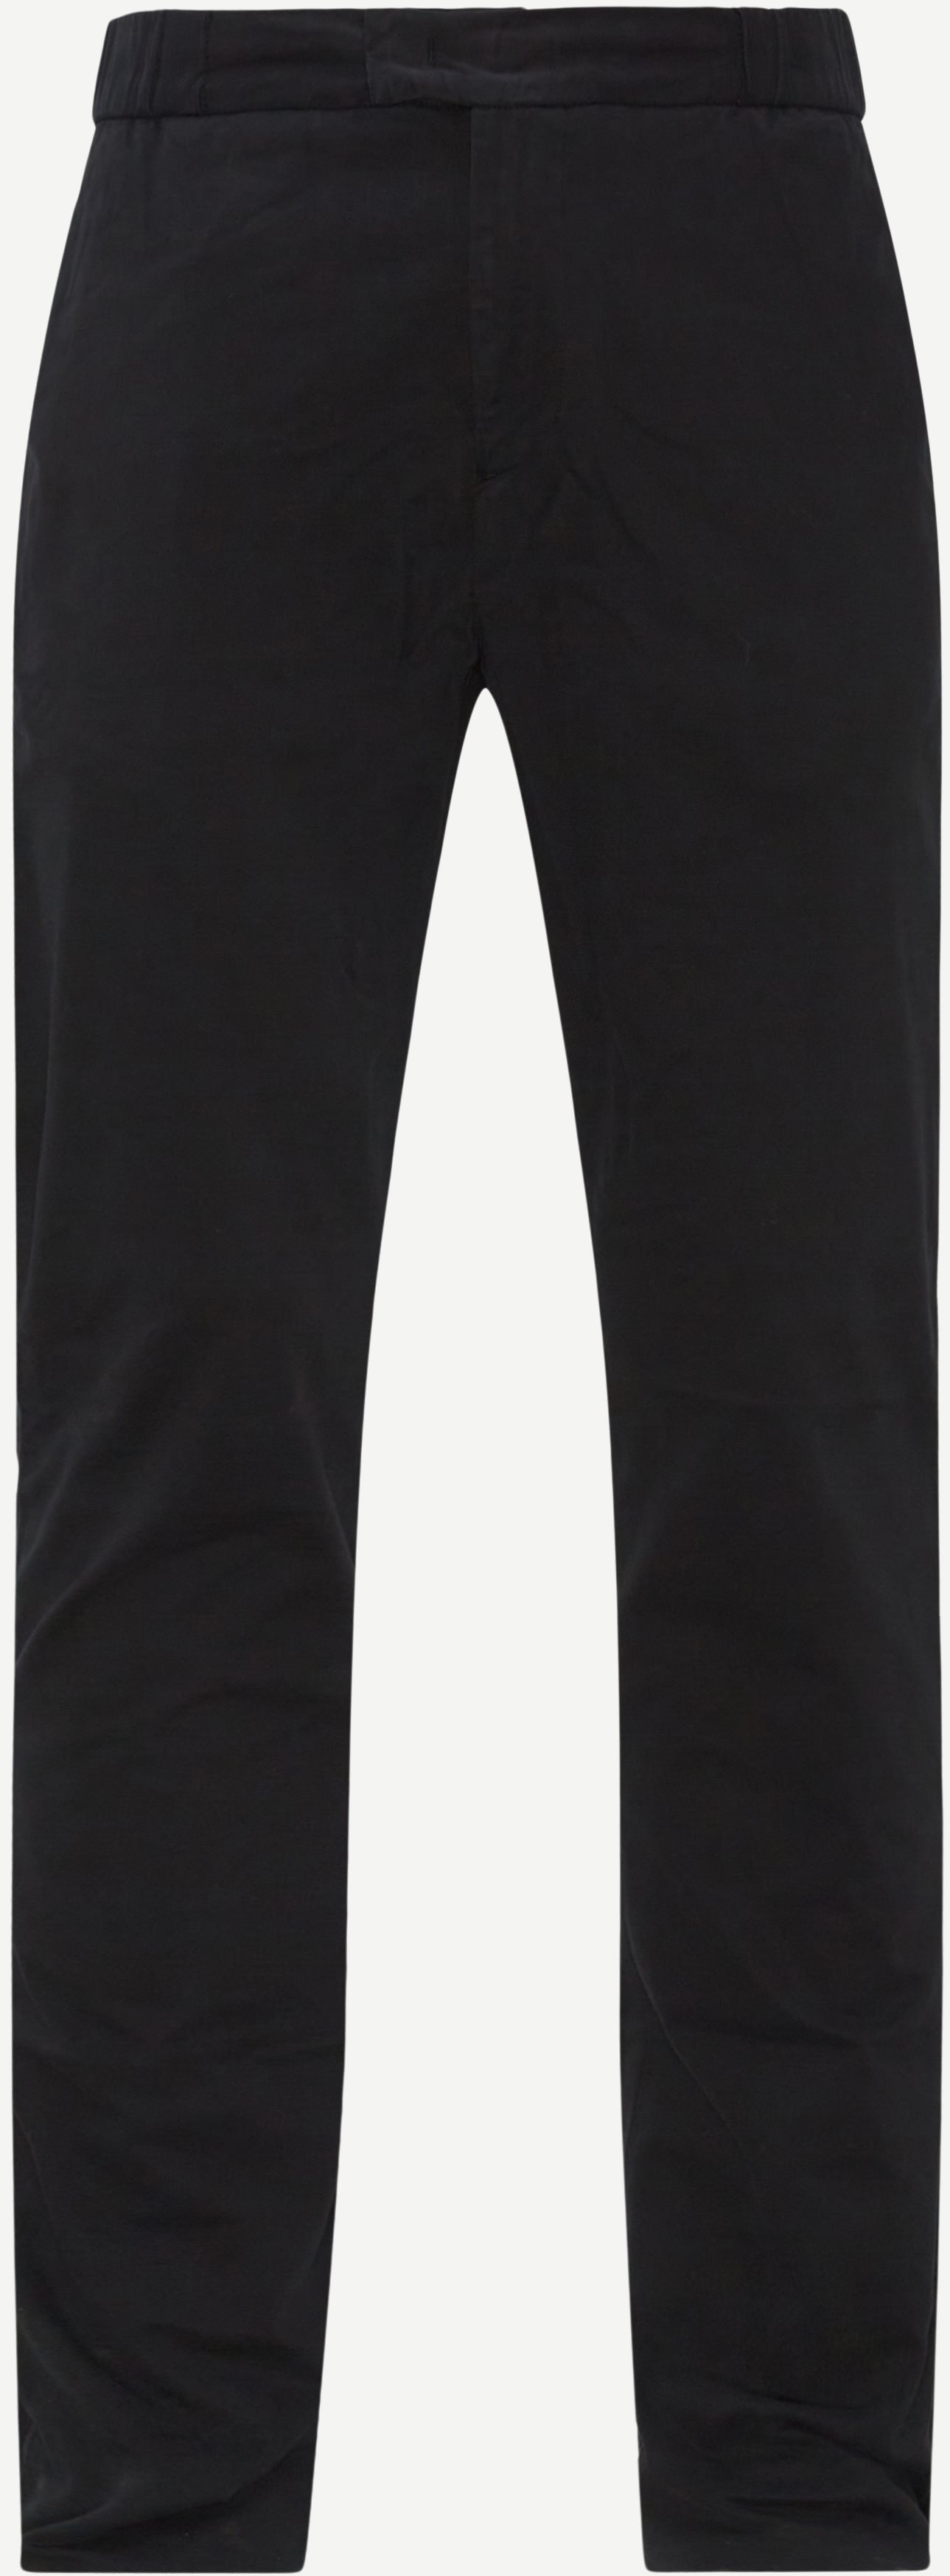 A.C.T. SOCIAL Trousers HARRY AS1028 Black